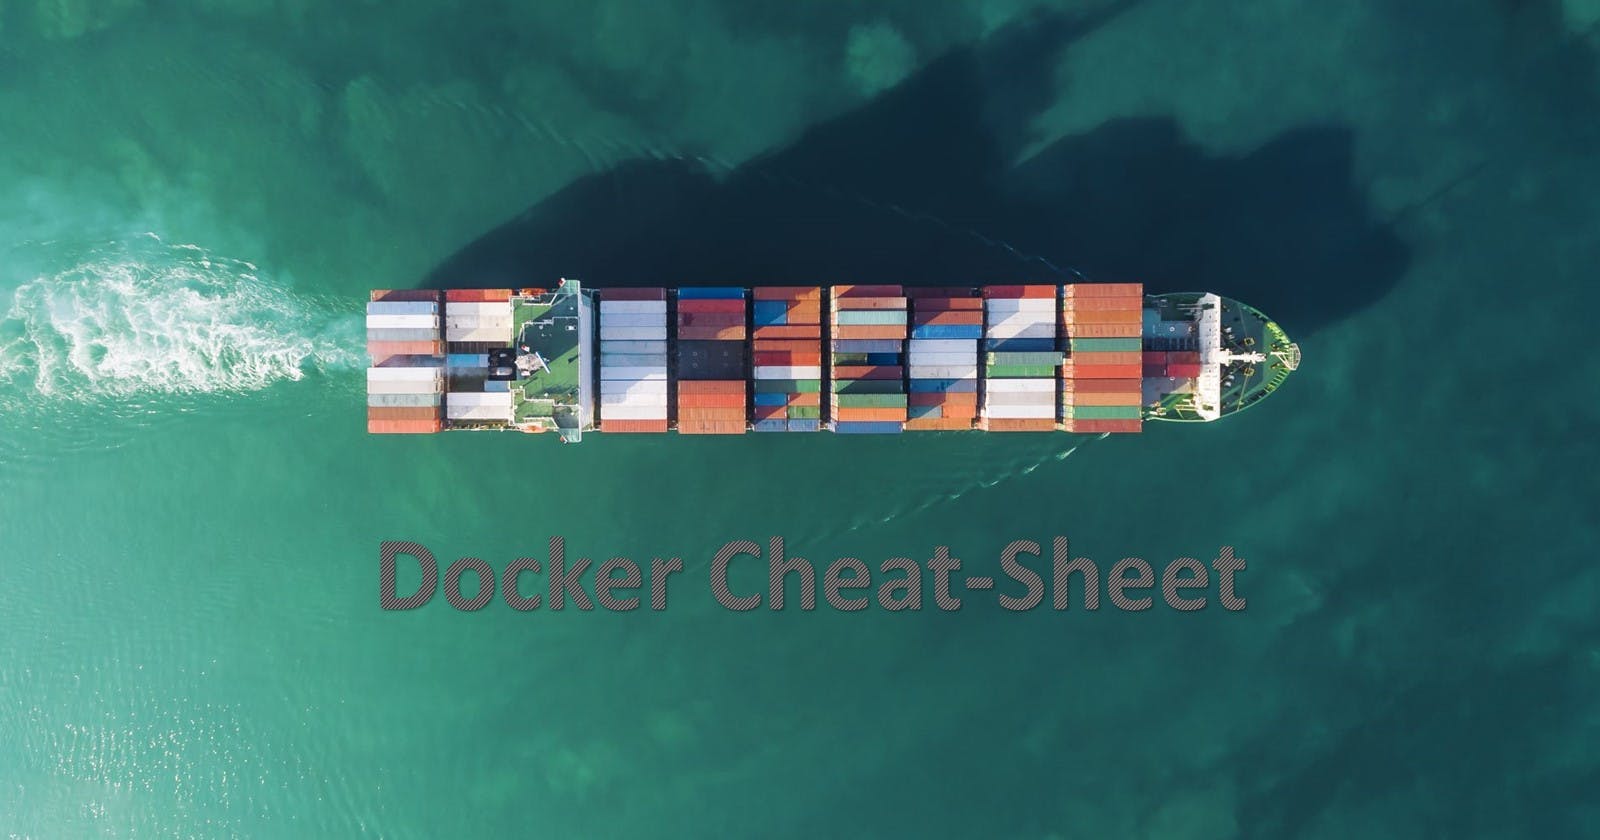 Docker Cheat-Sheet